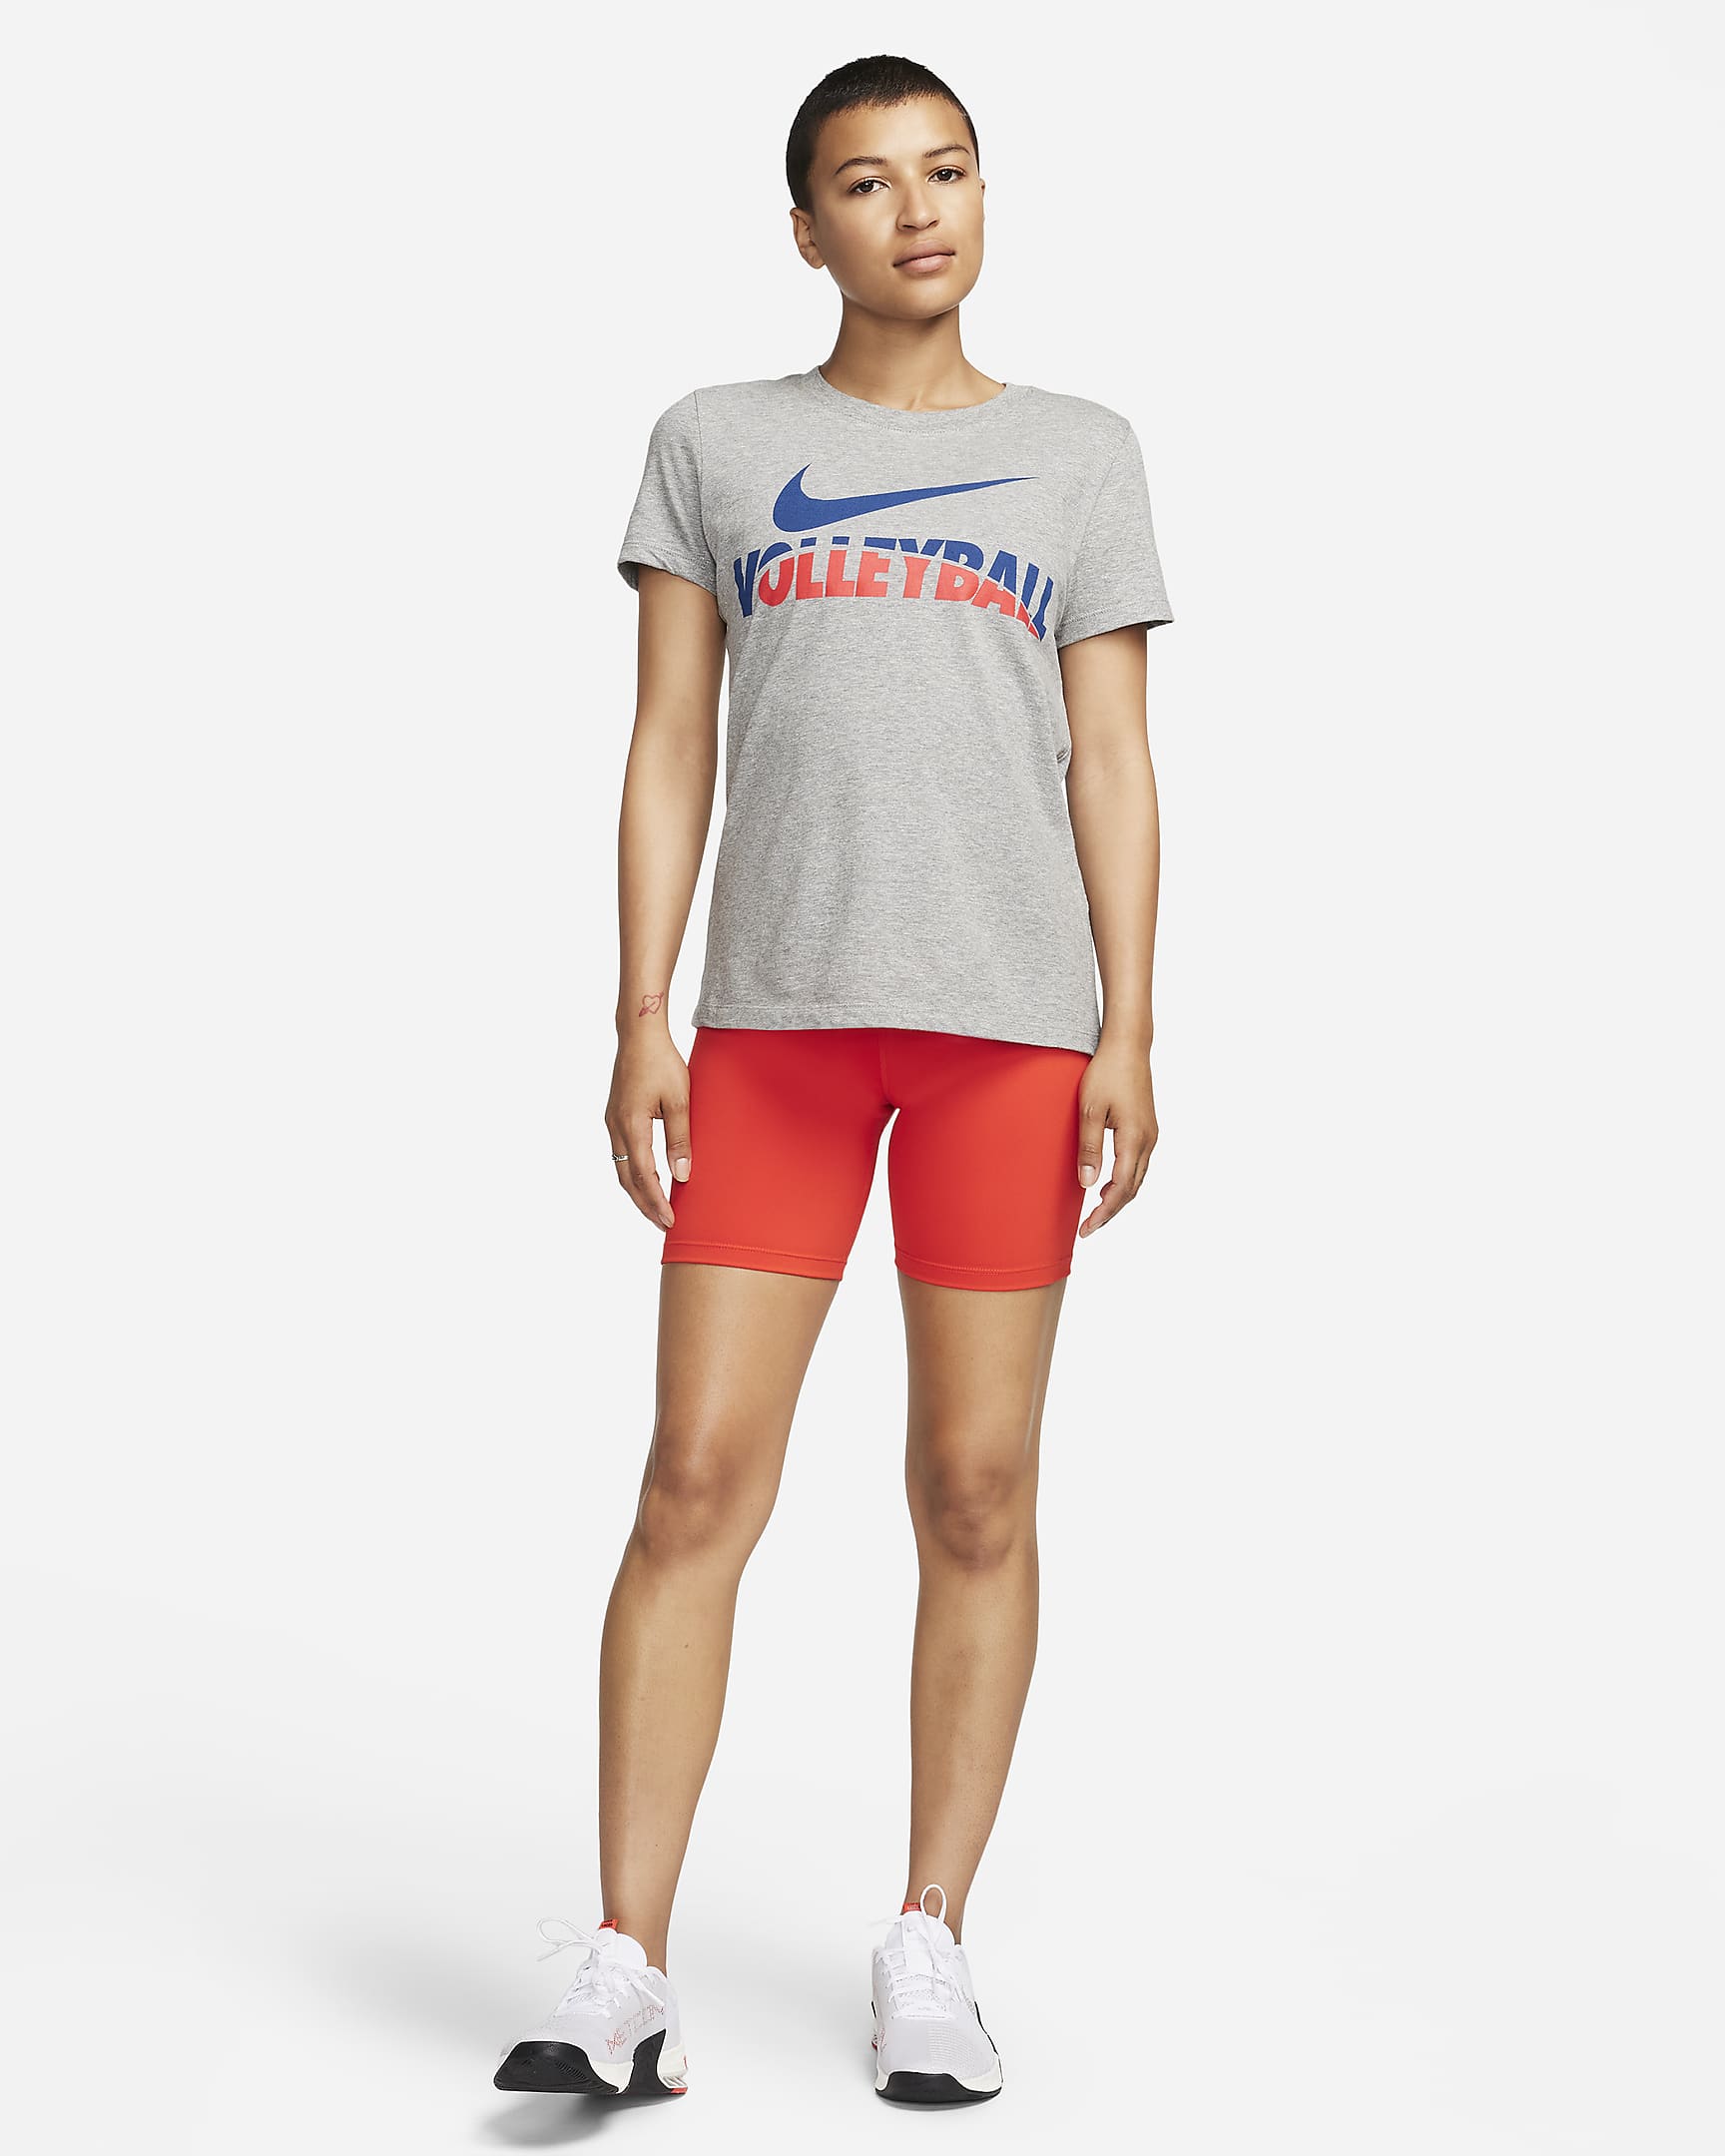 Nike Volleyball Women's T-Shirt. Nike.com